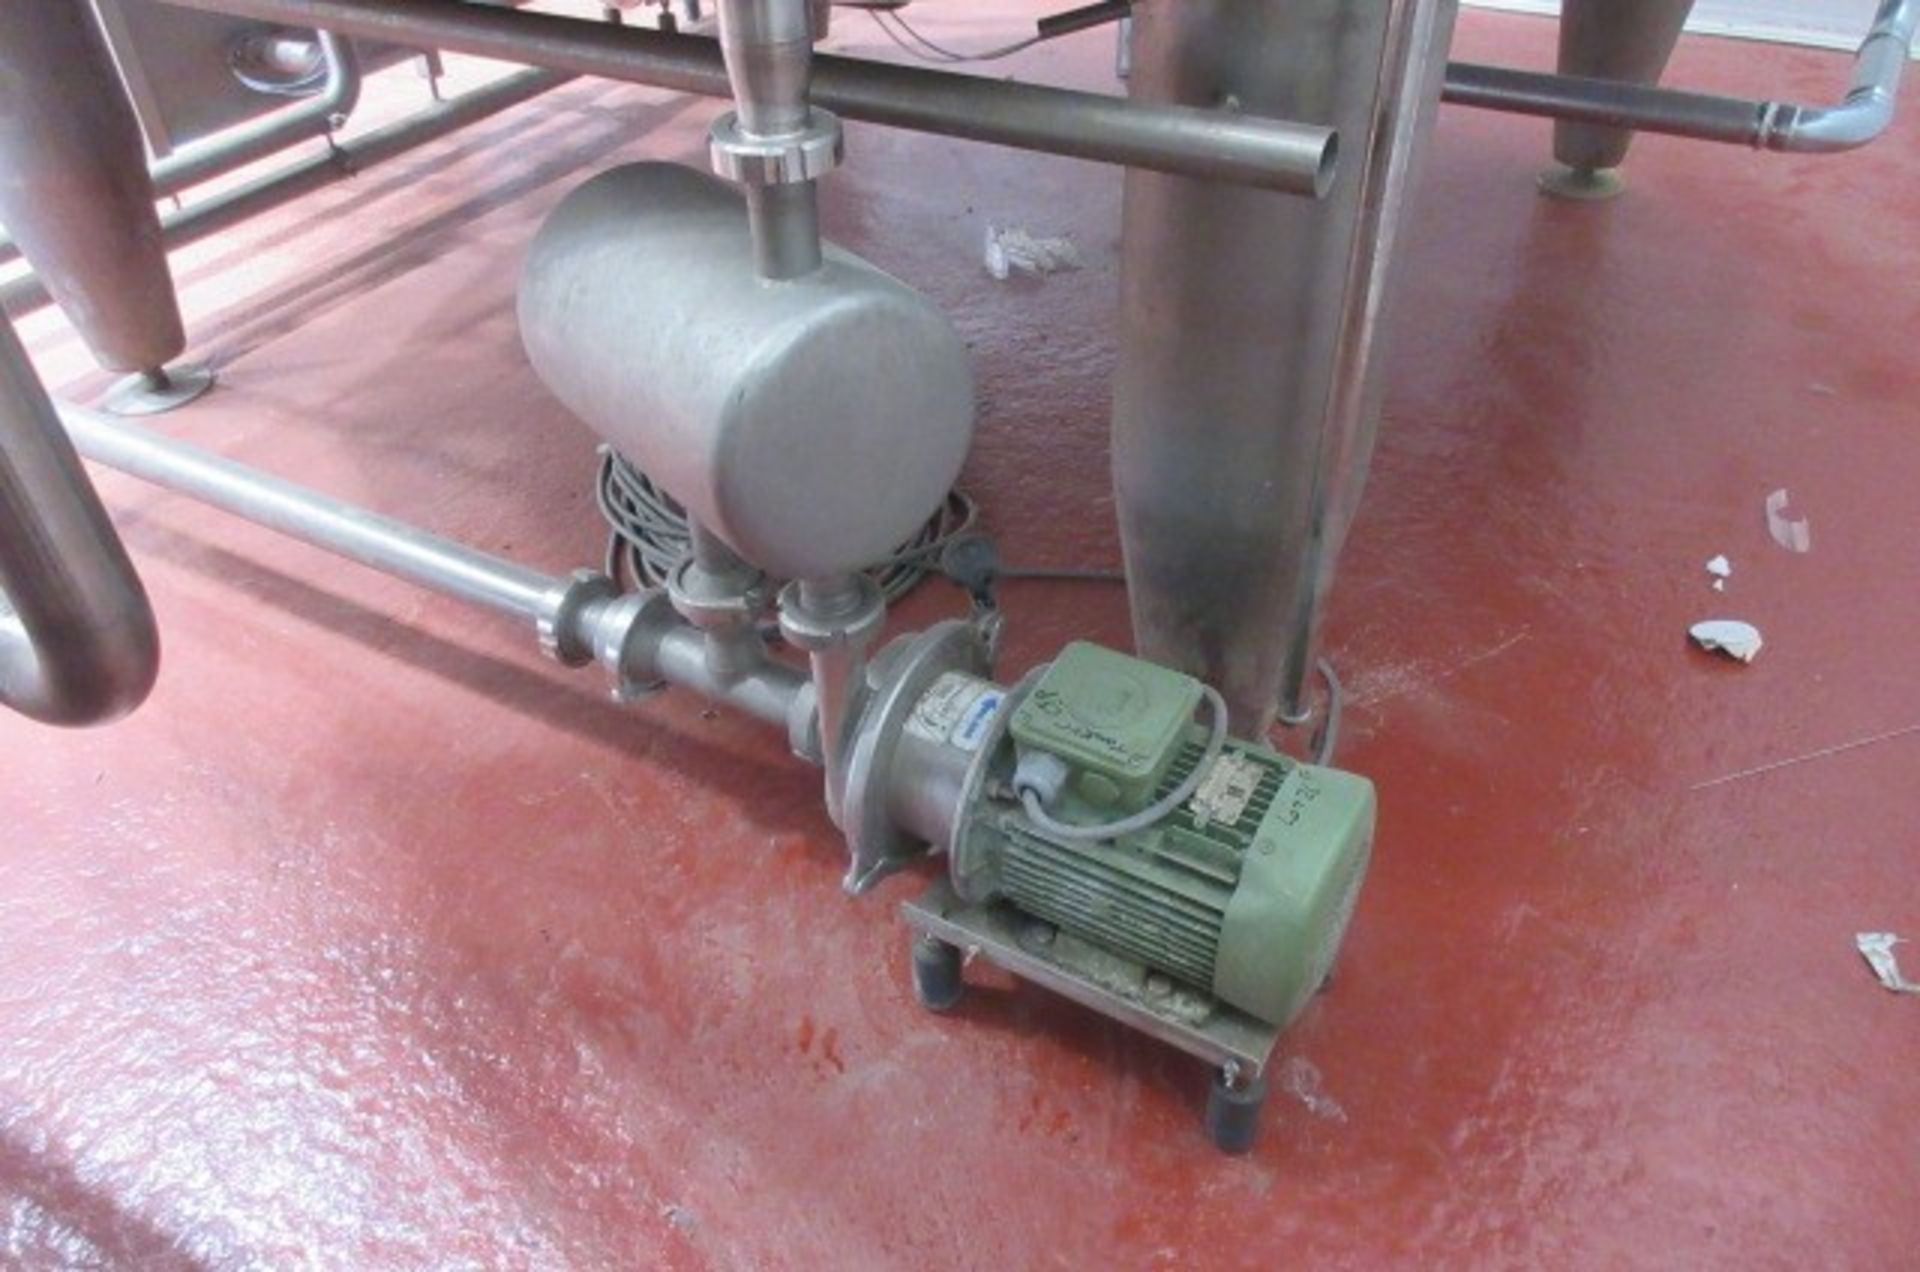 Stainless steel enclosed pump.